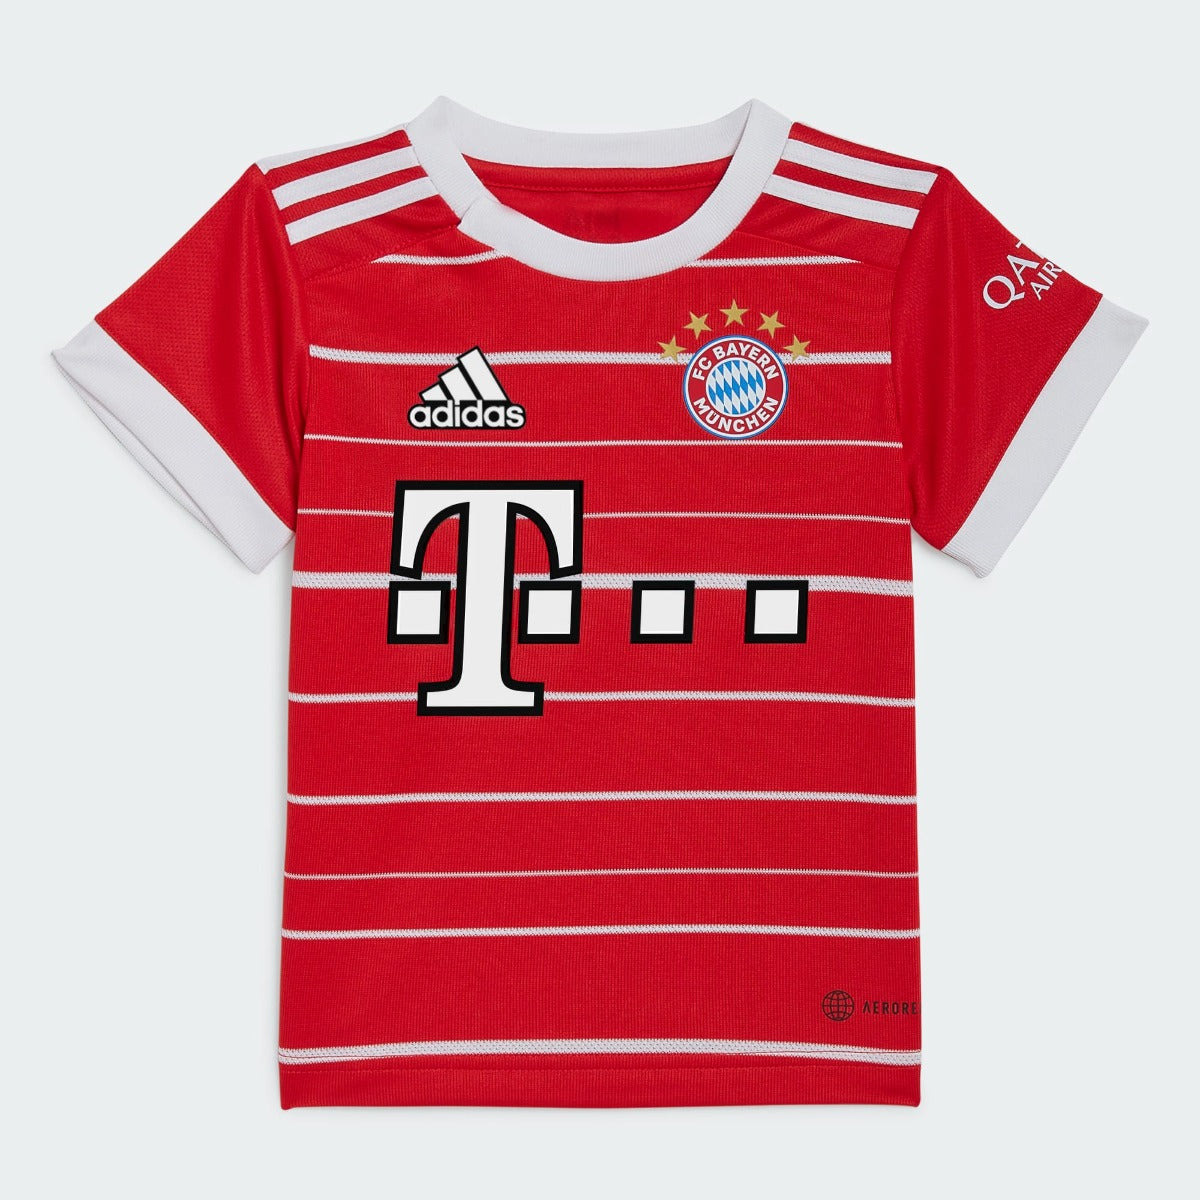 adidas 22-23 Bayern Munich Home Baby Kit - Red-White (Shirt - Front)